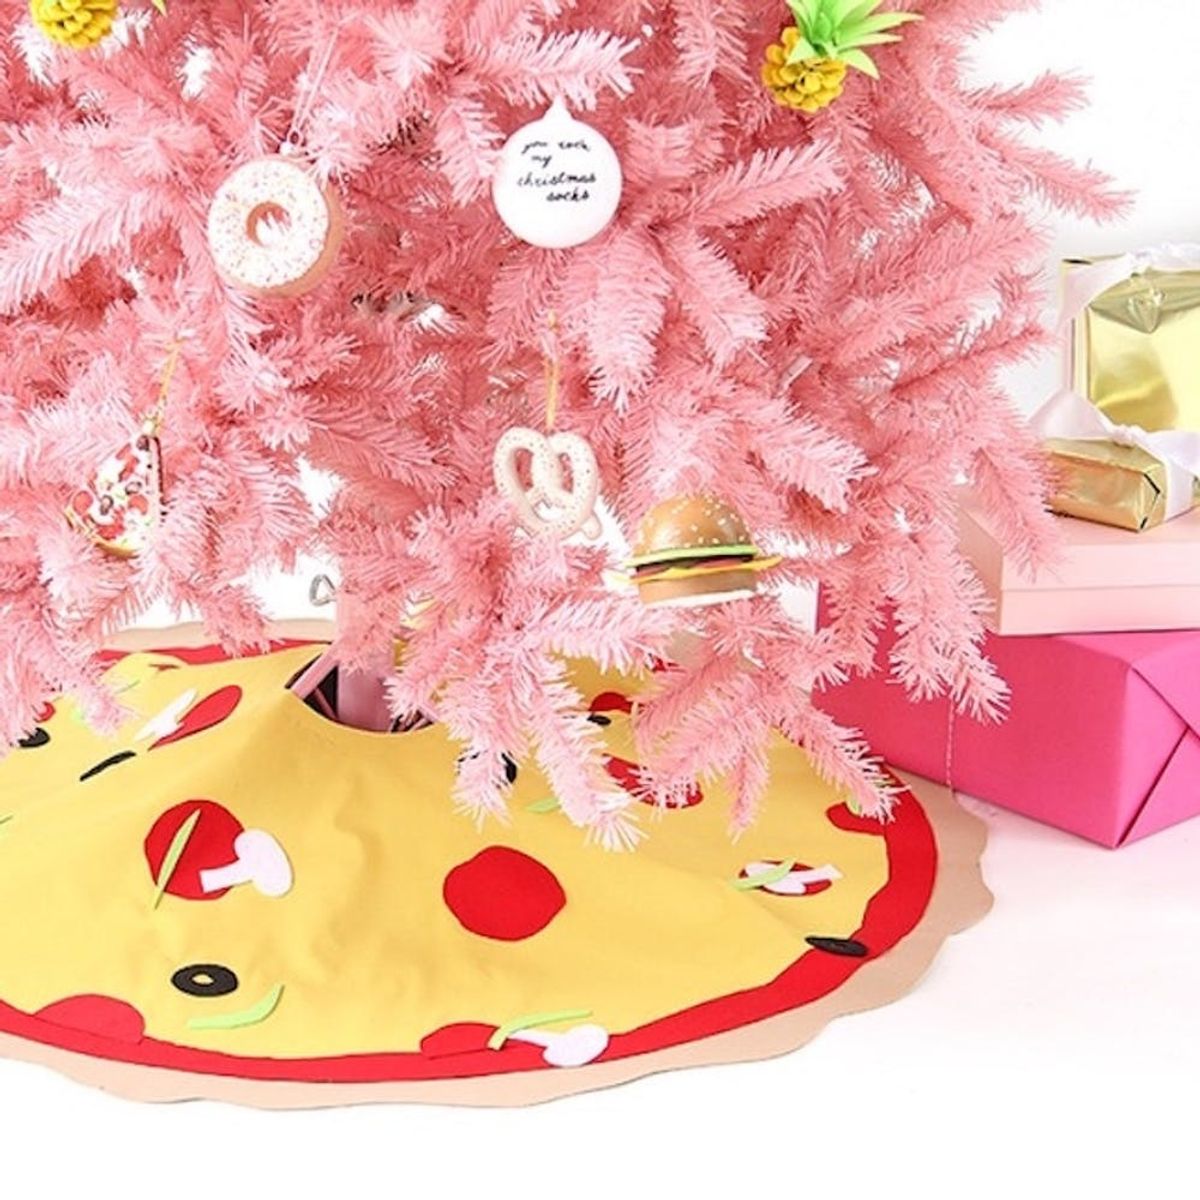 18 Christmas Tree Skirts to Dress Up Your Holiday Decor